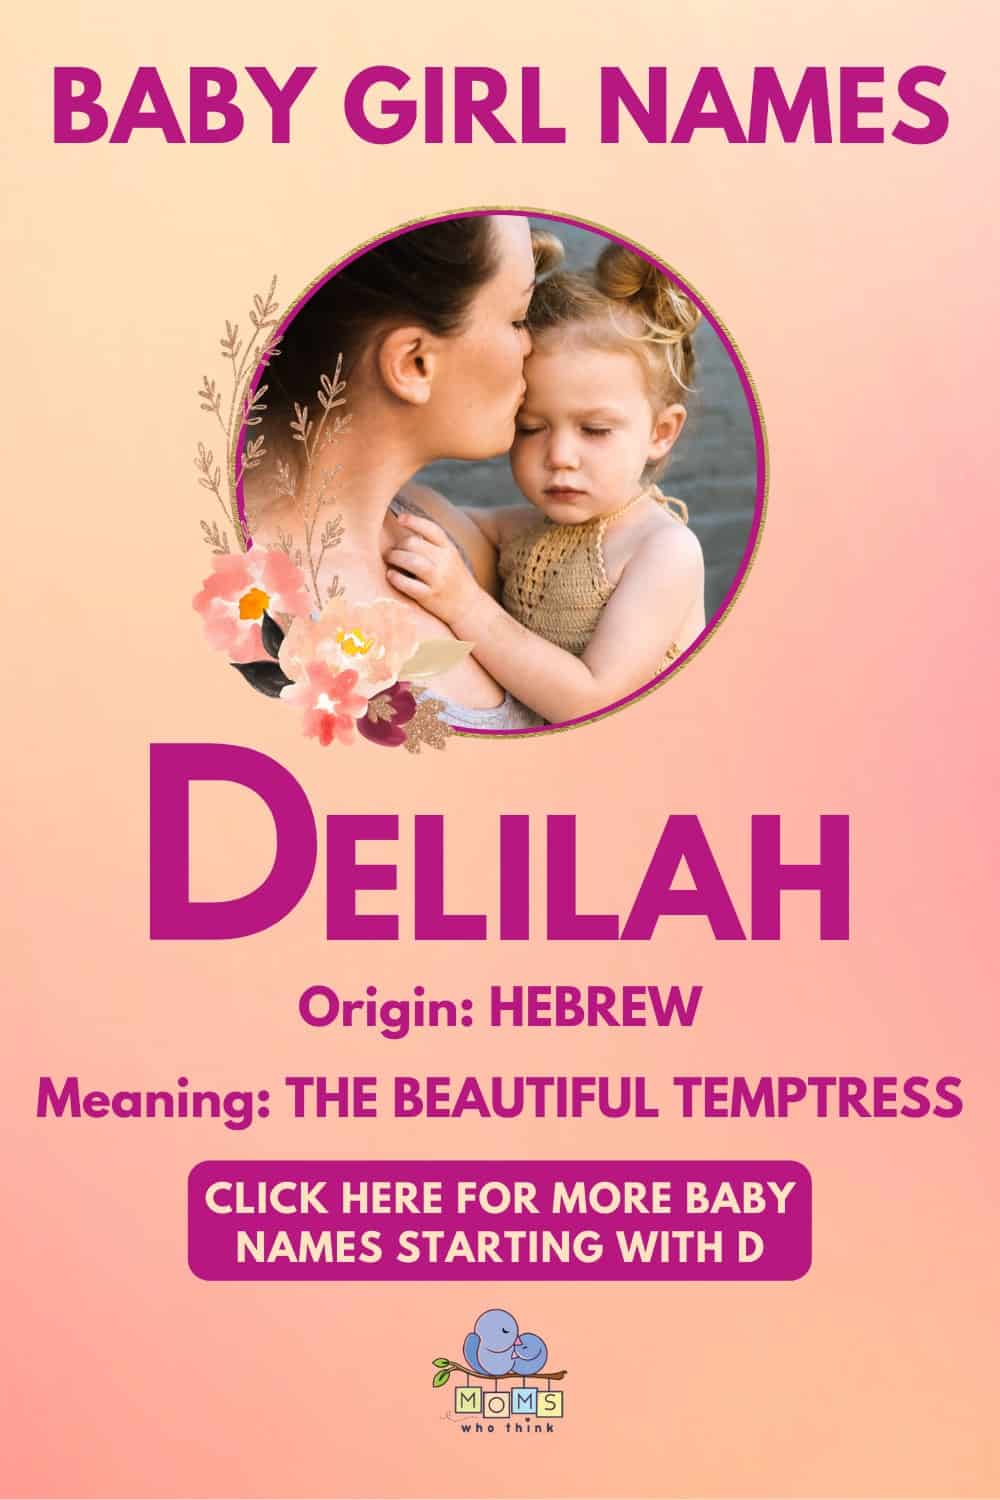 Baby girl name meanings - Delilah